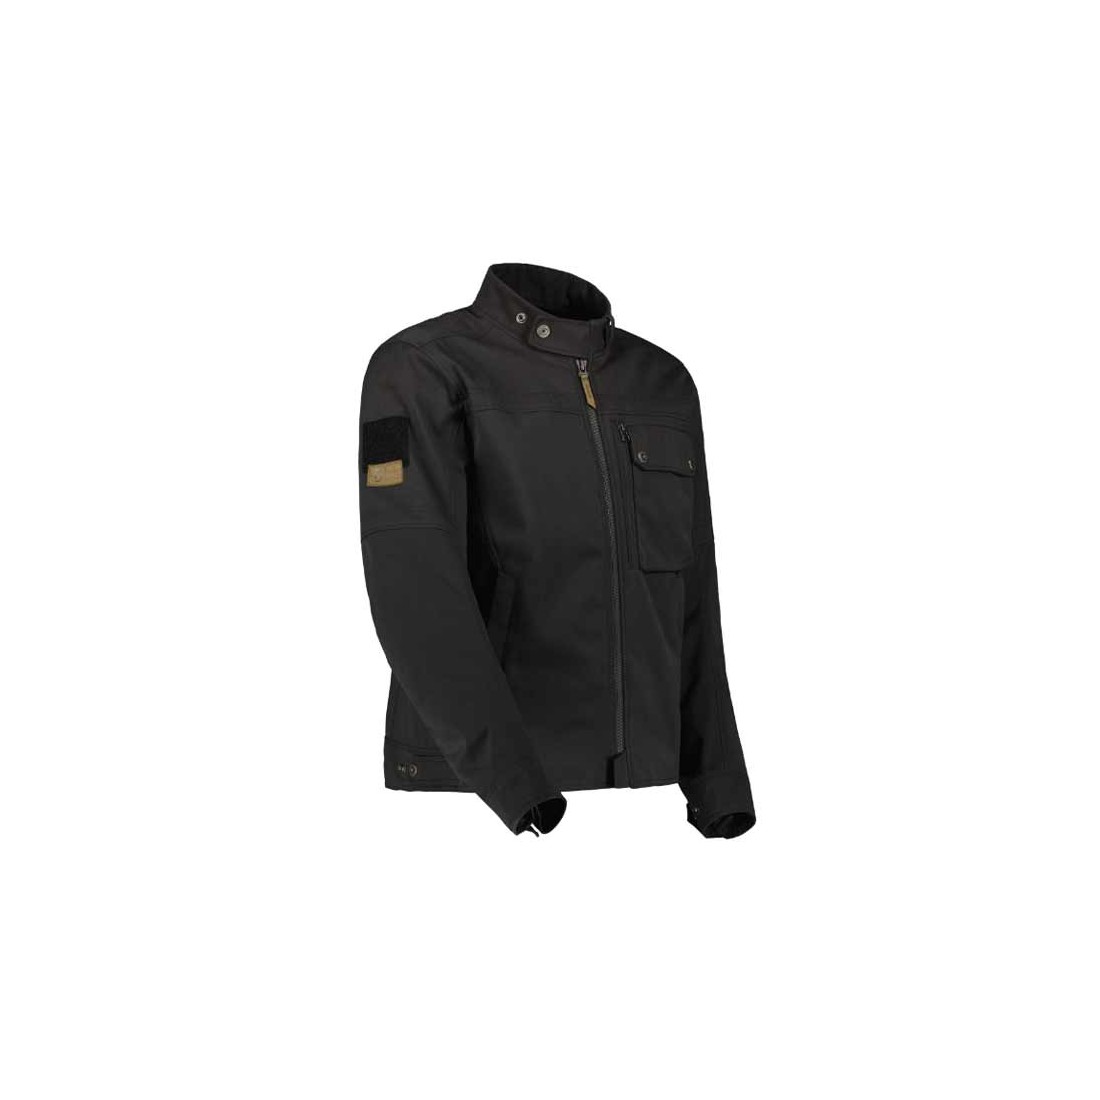 Scott Vintage motorcycle jacket black